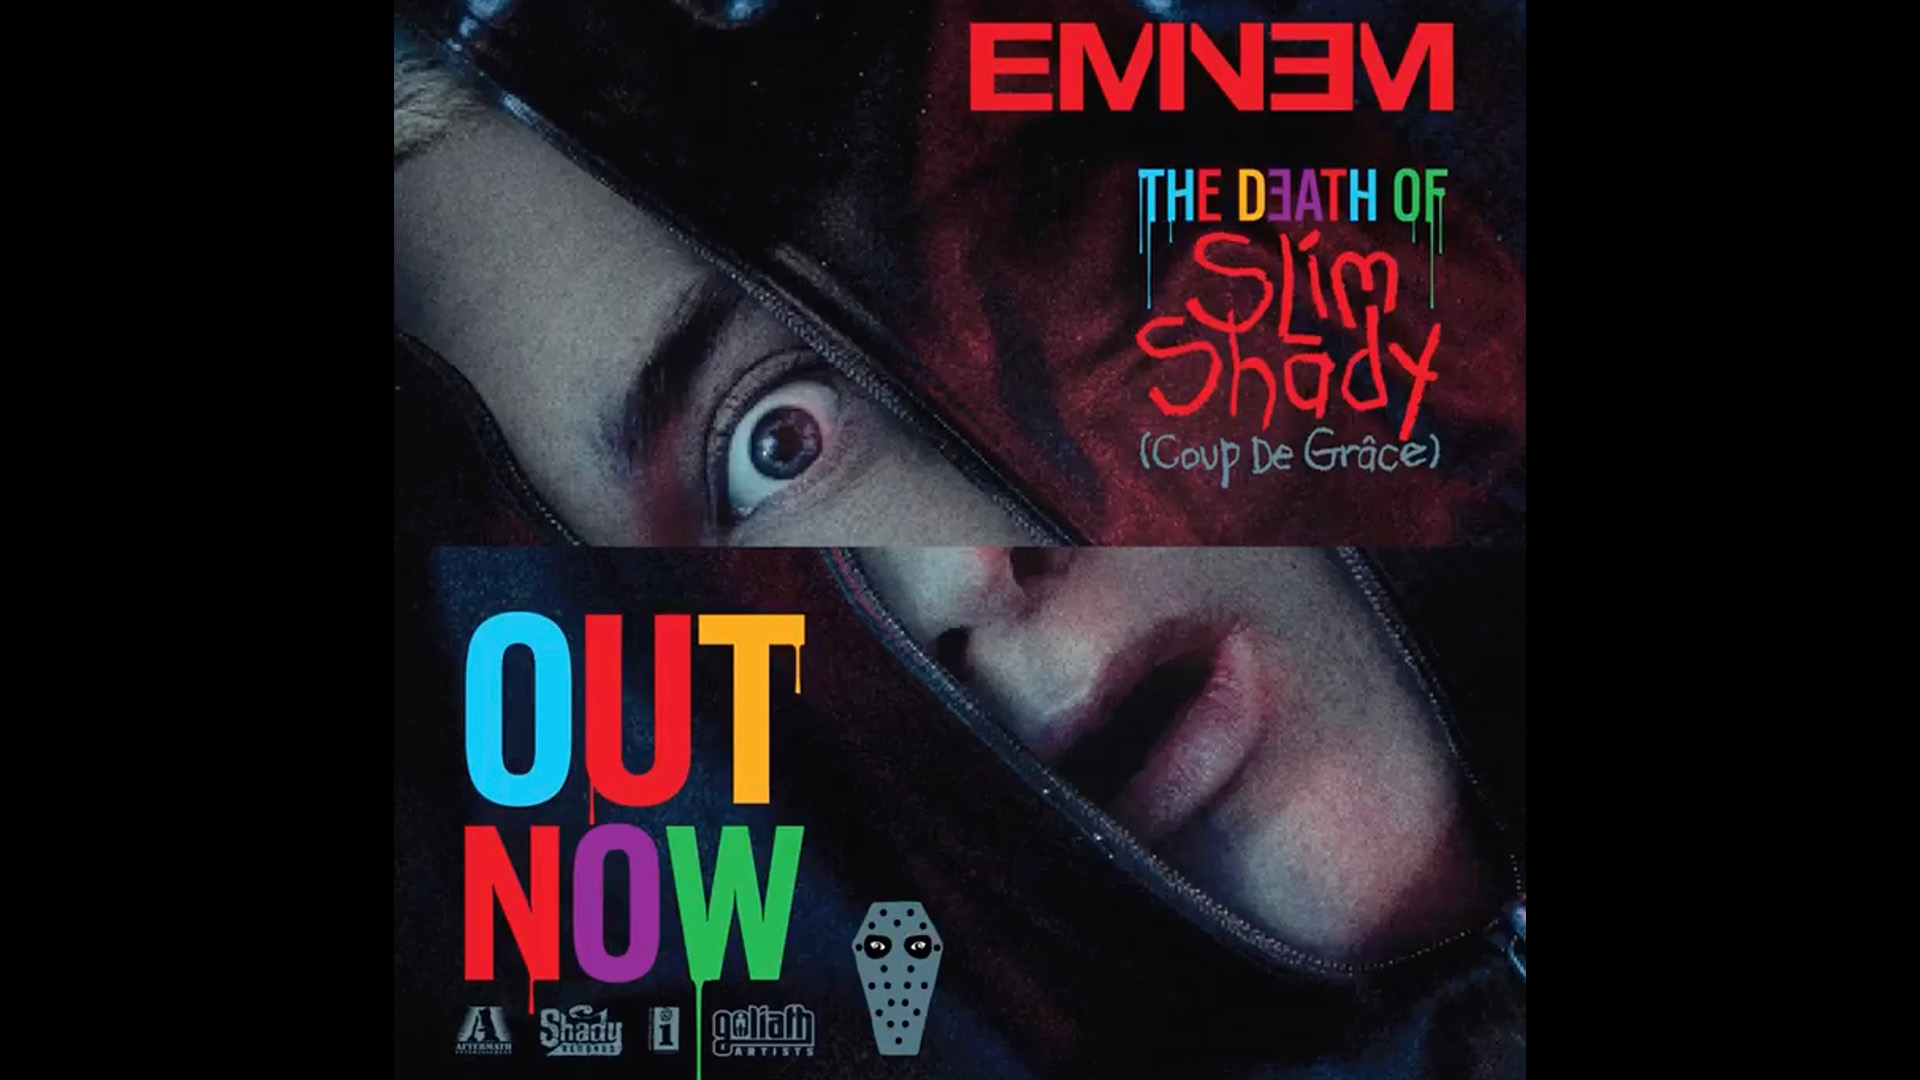 Full list of guest appearances on Eminem’s new album “The Death of Slim Shady (Coup de Grâce)” | Eminem.Pro